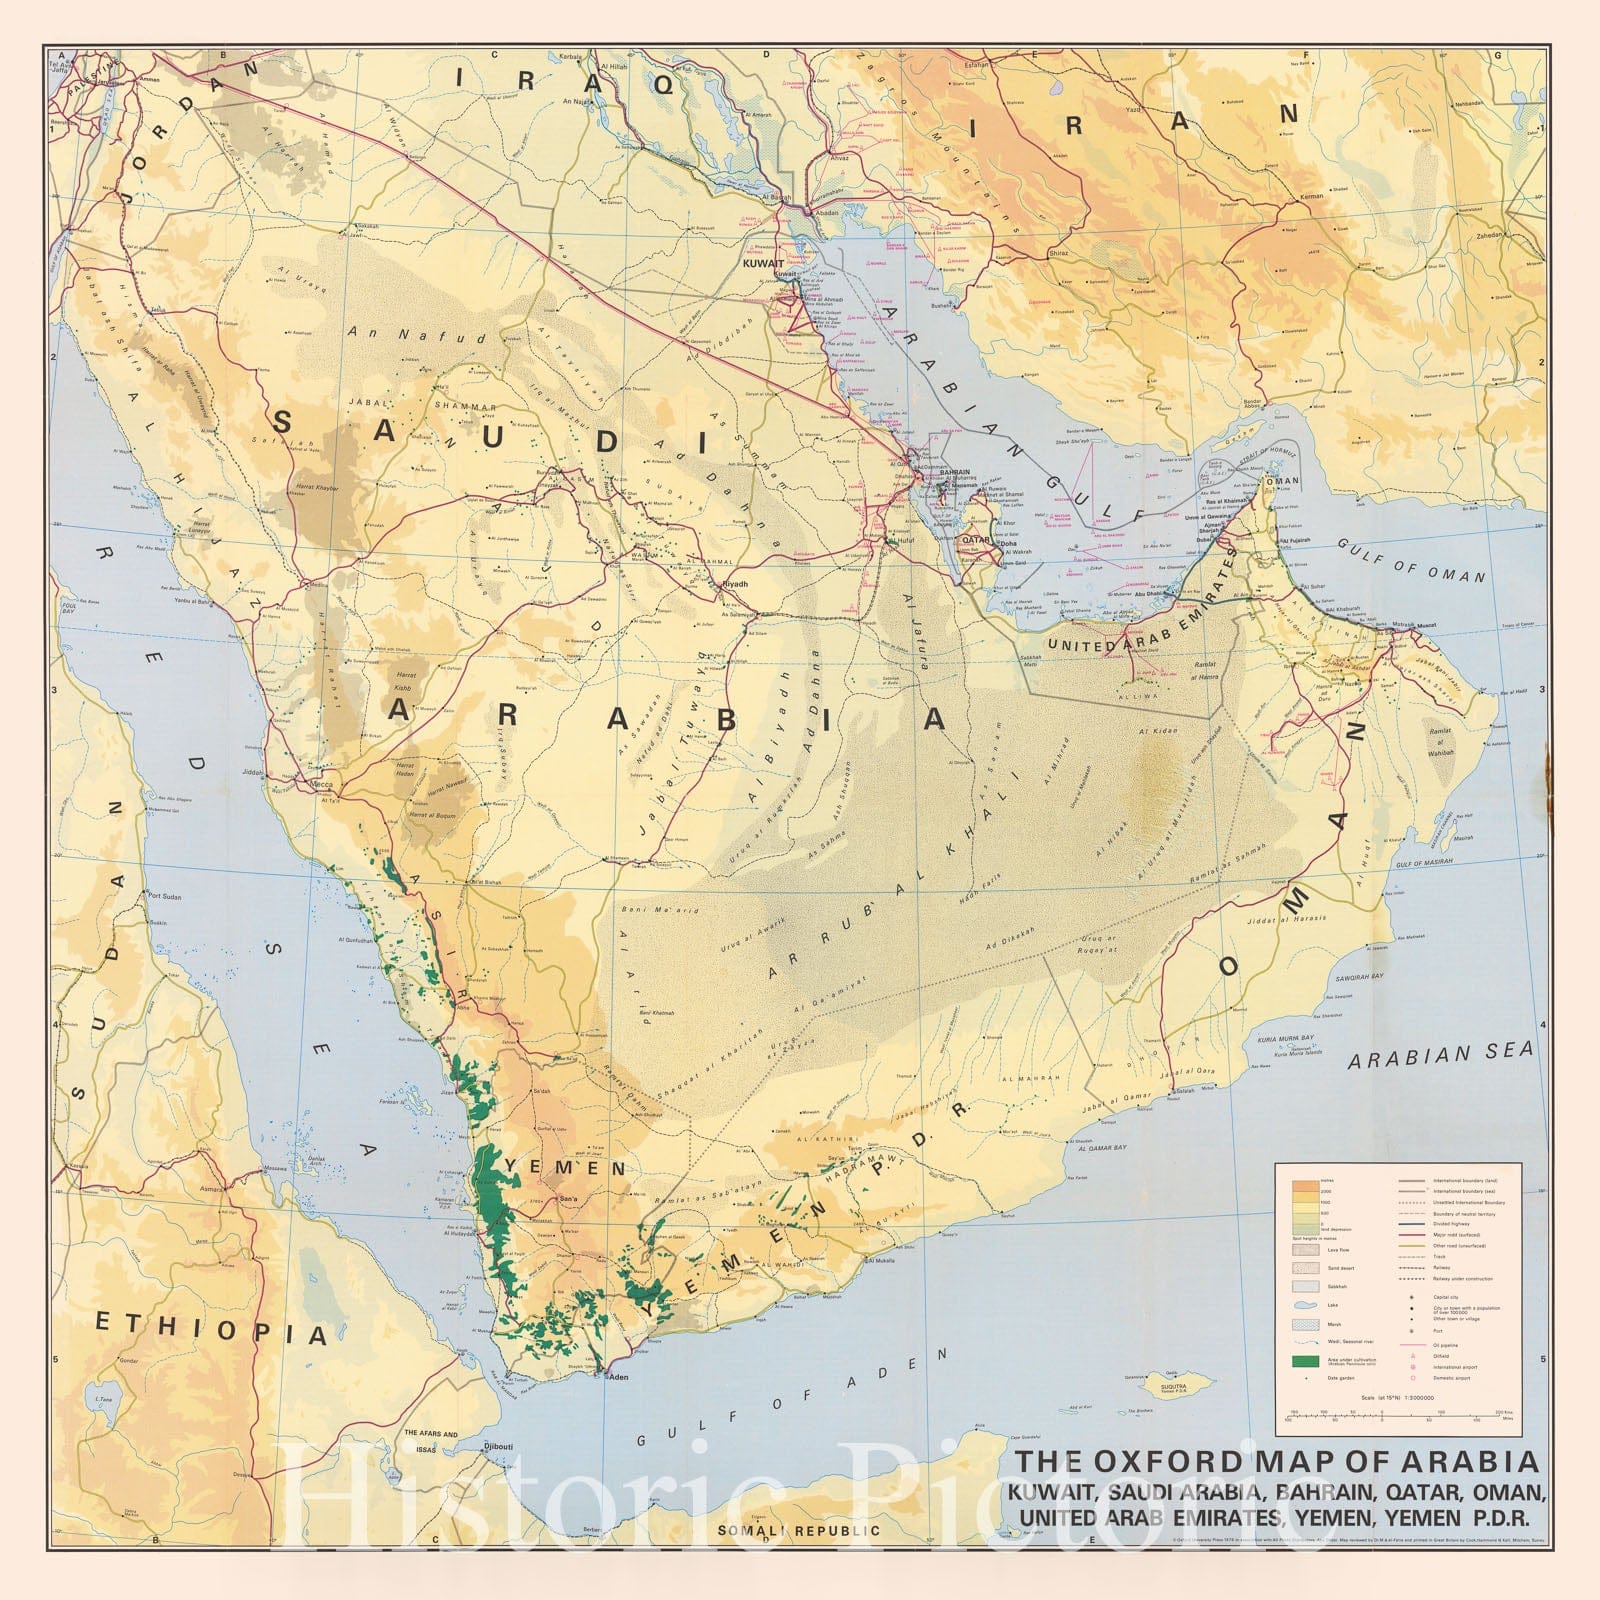 Historic Map - The Oxford Map of Arabia Kuwait, Saudi Arabia, Bahrain, Qatar, Oman, United Arab Emirates, Yemen, Yemen P.D.R, 1976, Oxford University Press - Vintage Wall Art